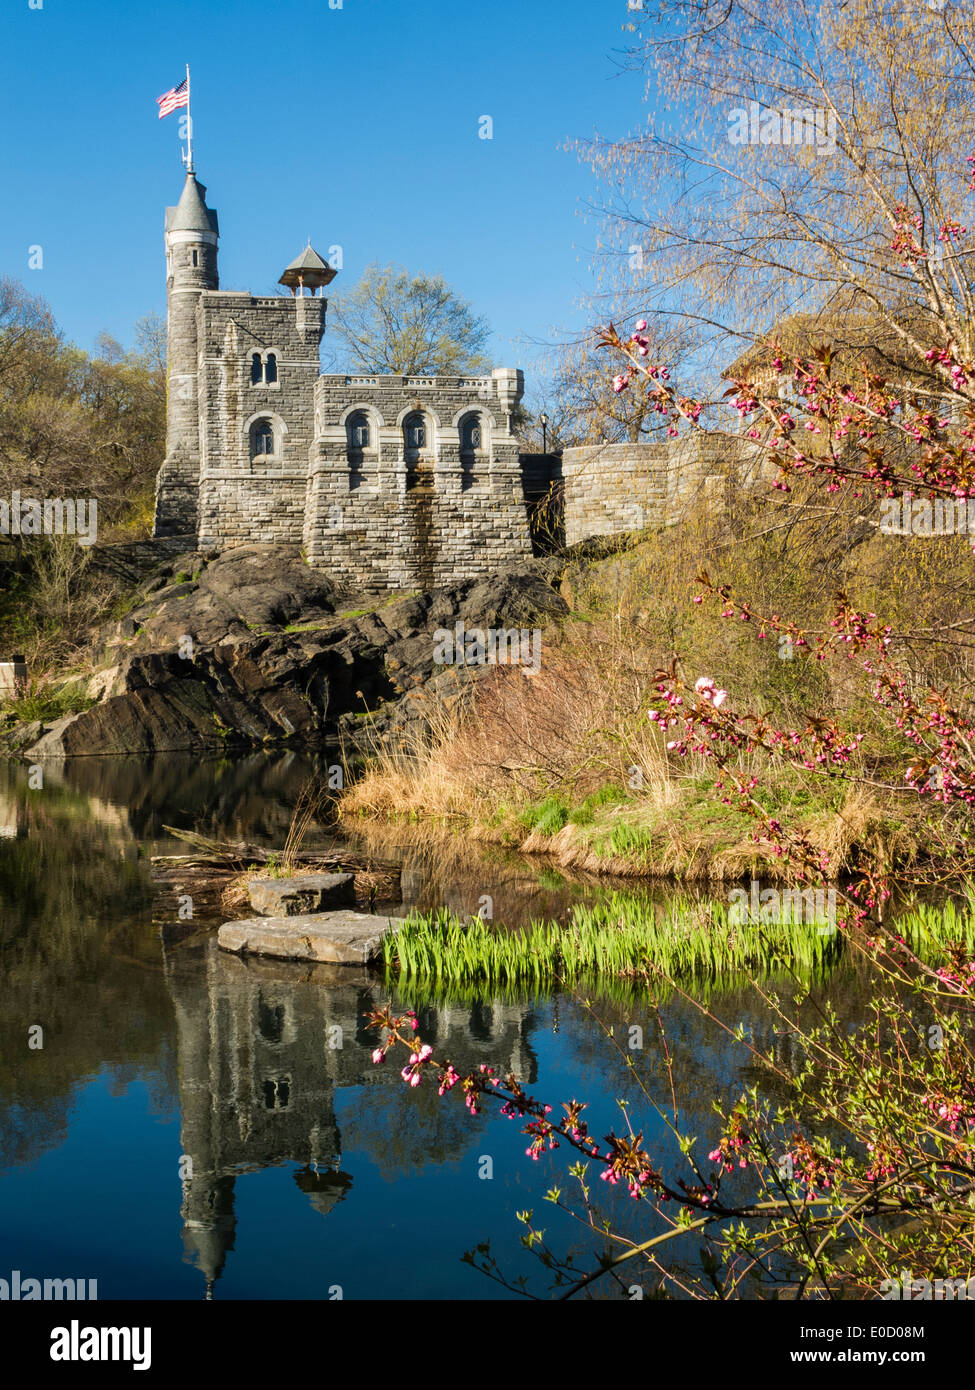 Balvedere Castle Central Park NY Stock Image - Image of landmarks, central:  194164569